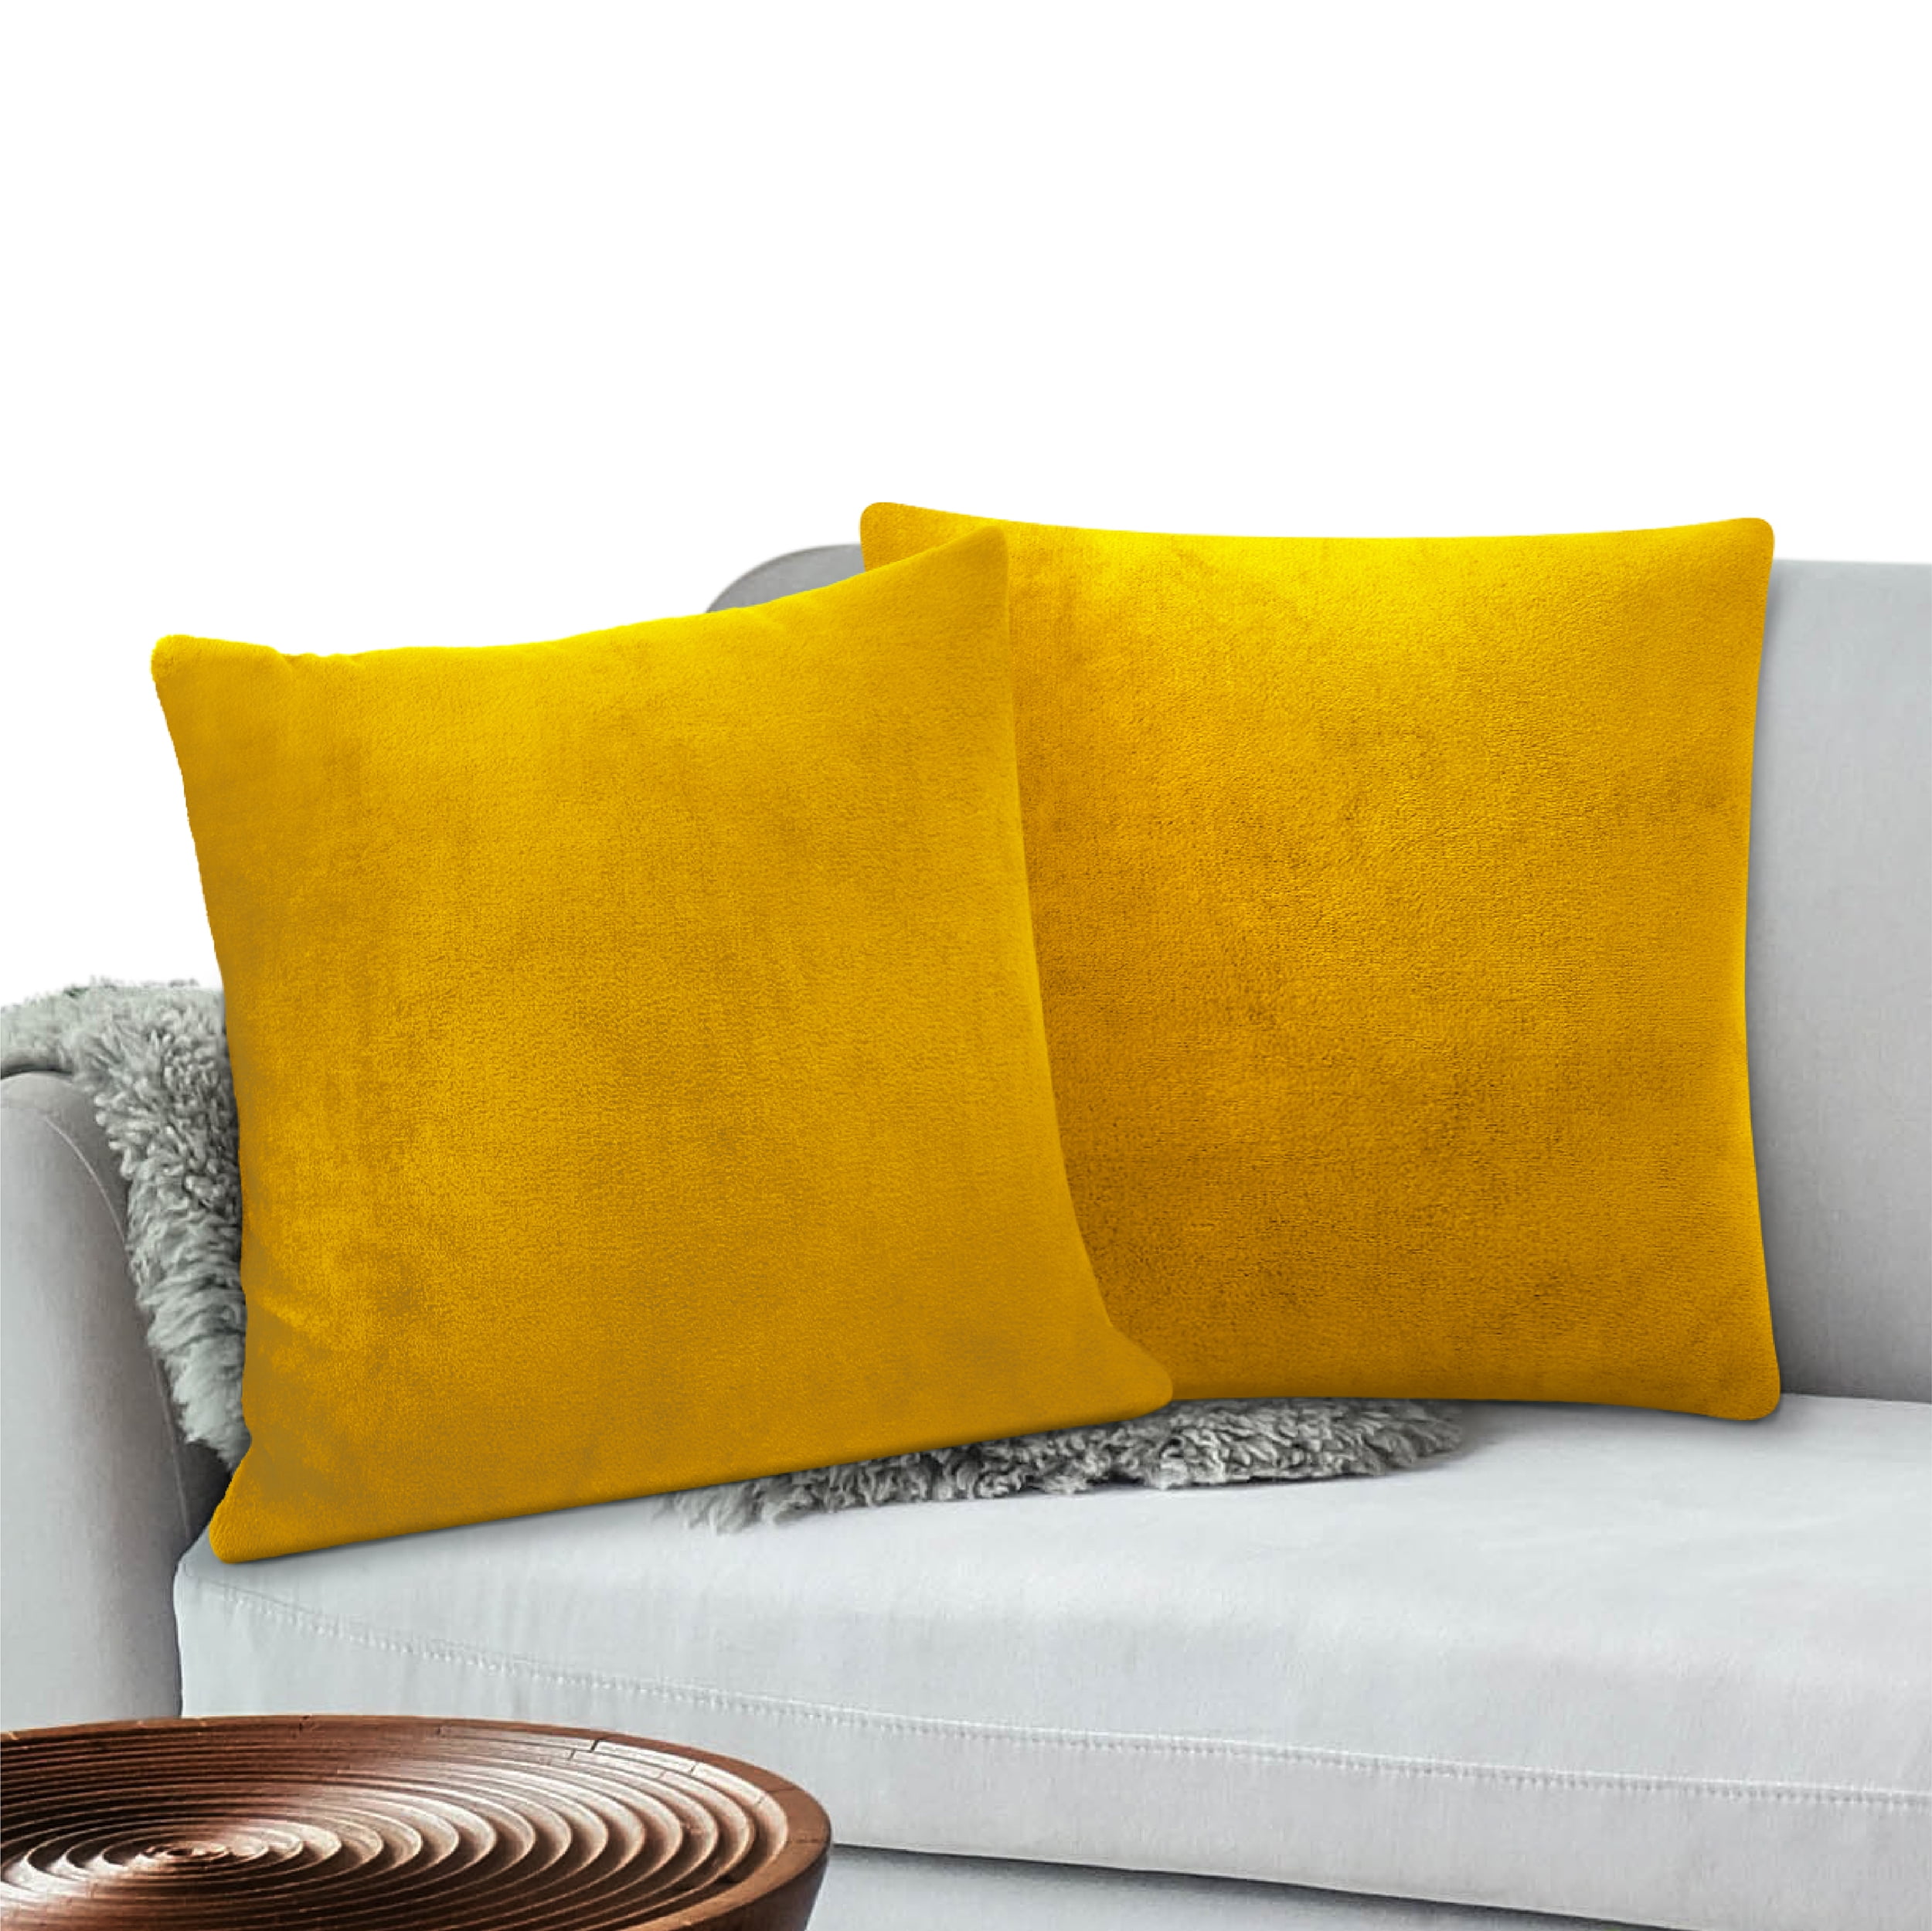 PAVILIA Mustard Yellow Throw Pillow Covers 20x20 Set of 2 ...